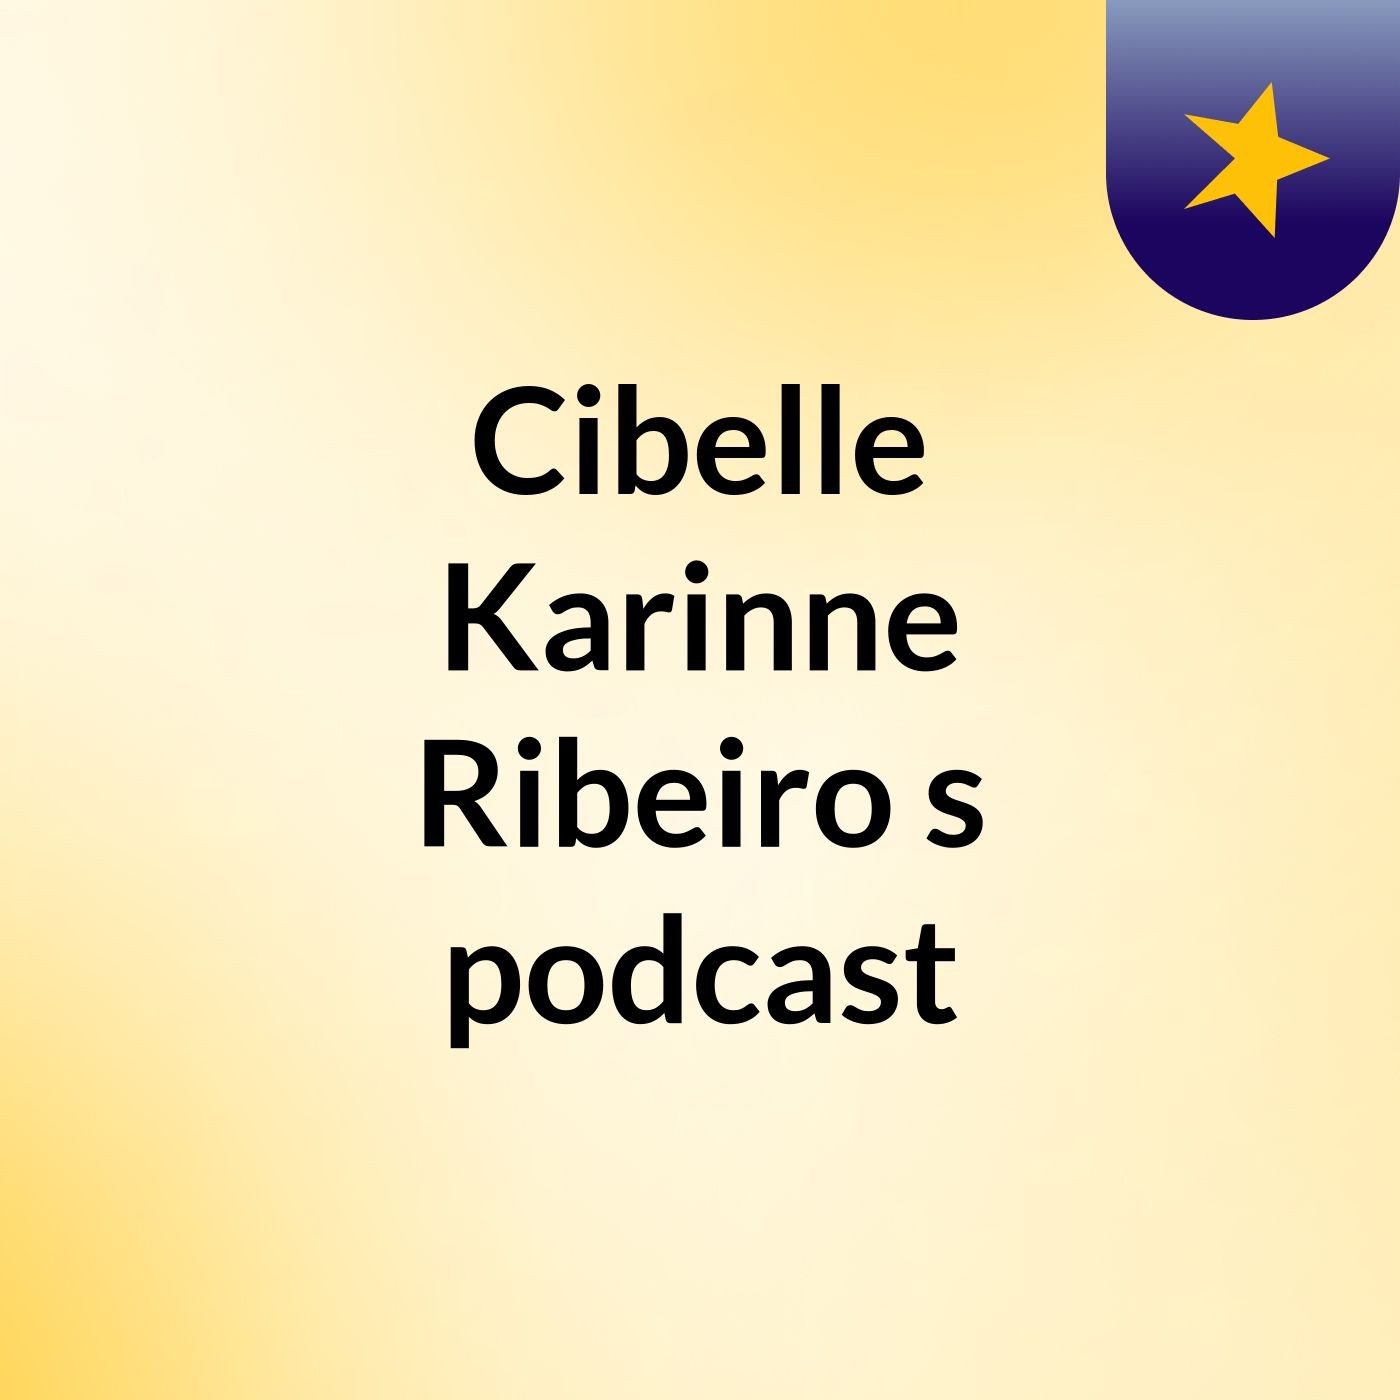 Cibelle Karinne Ribeiro's podcast